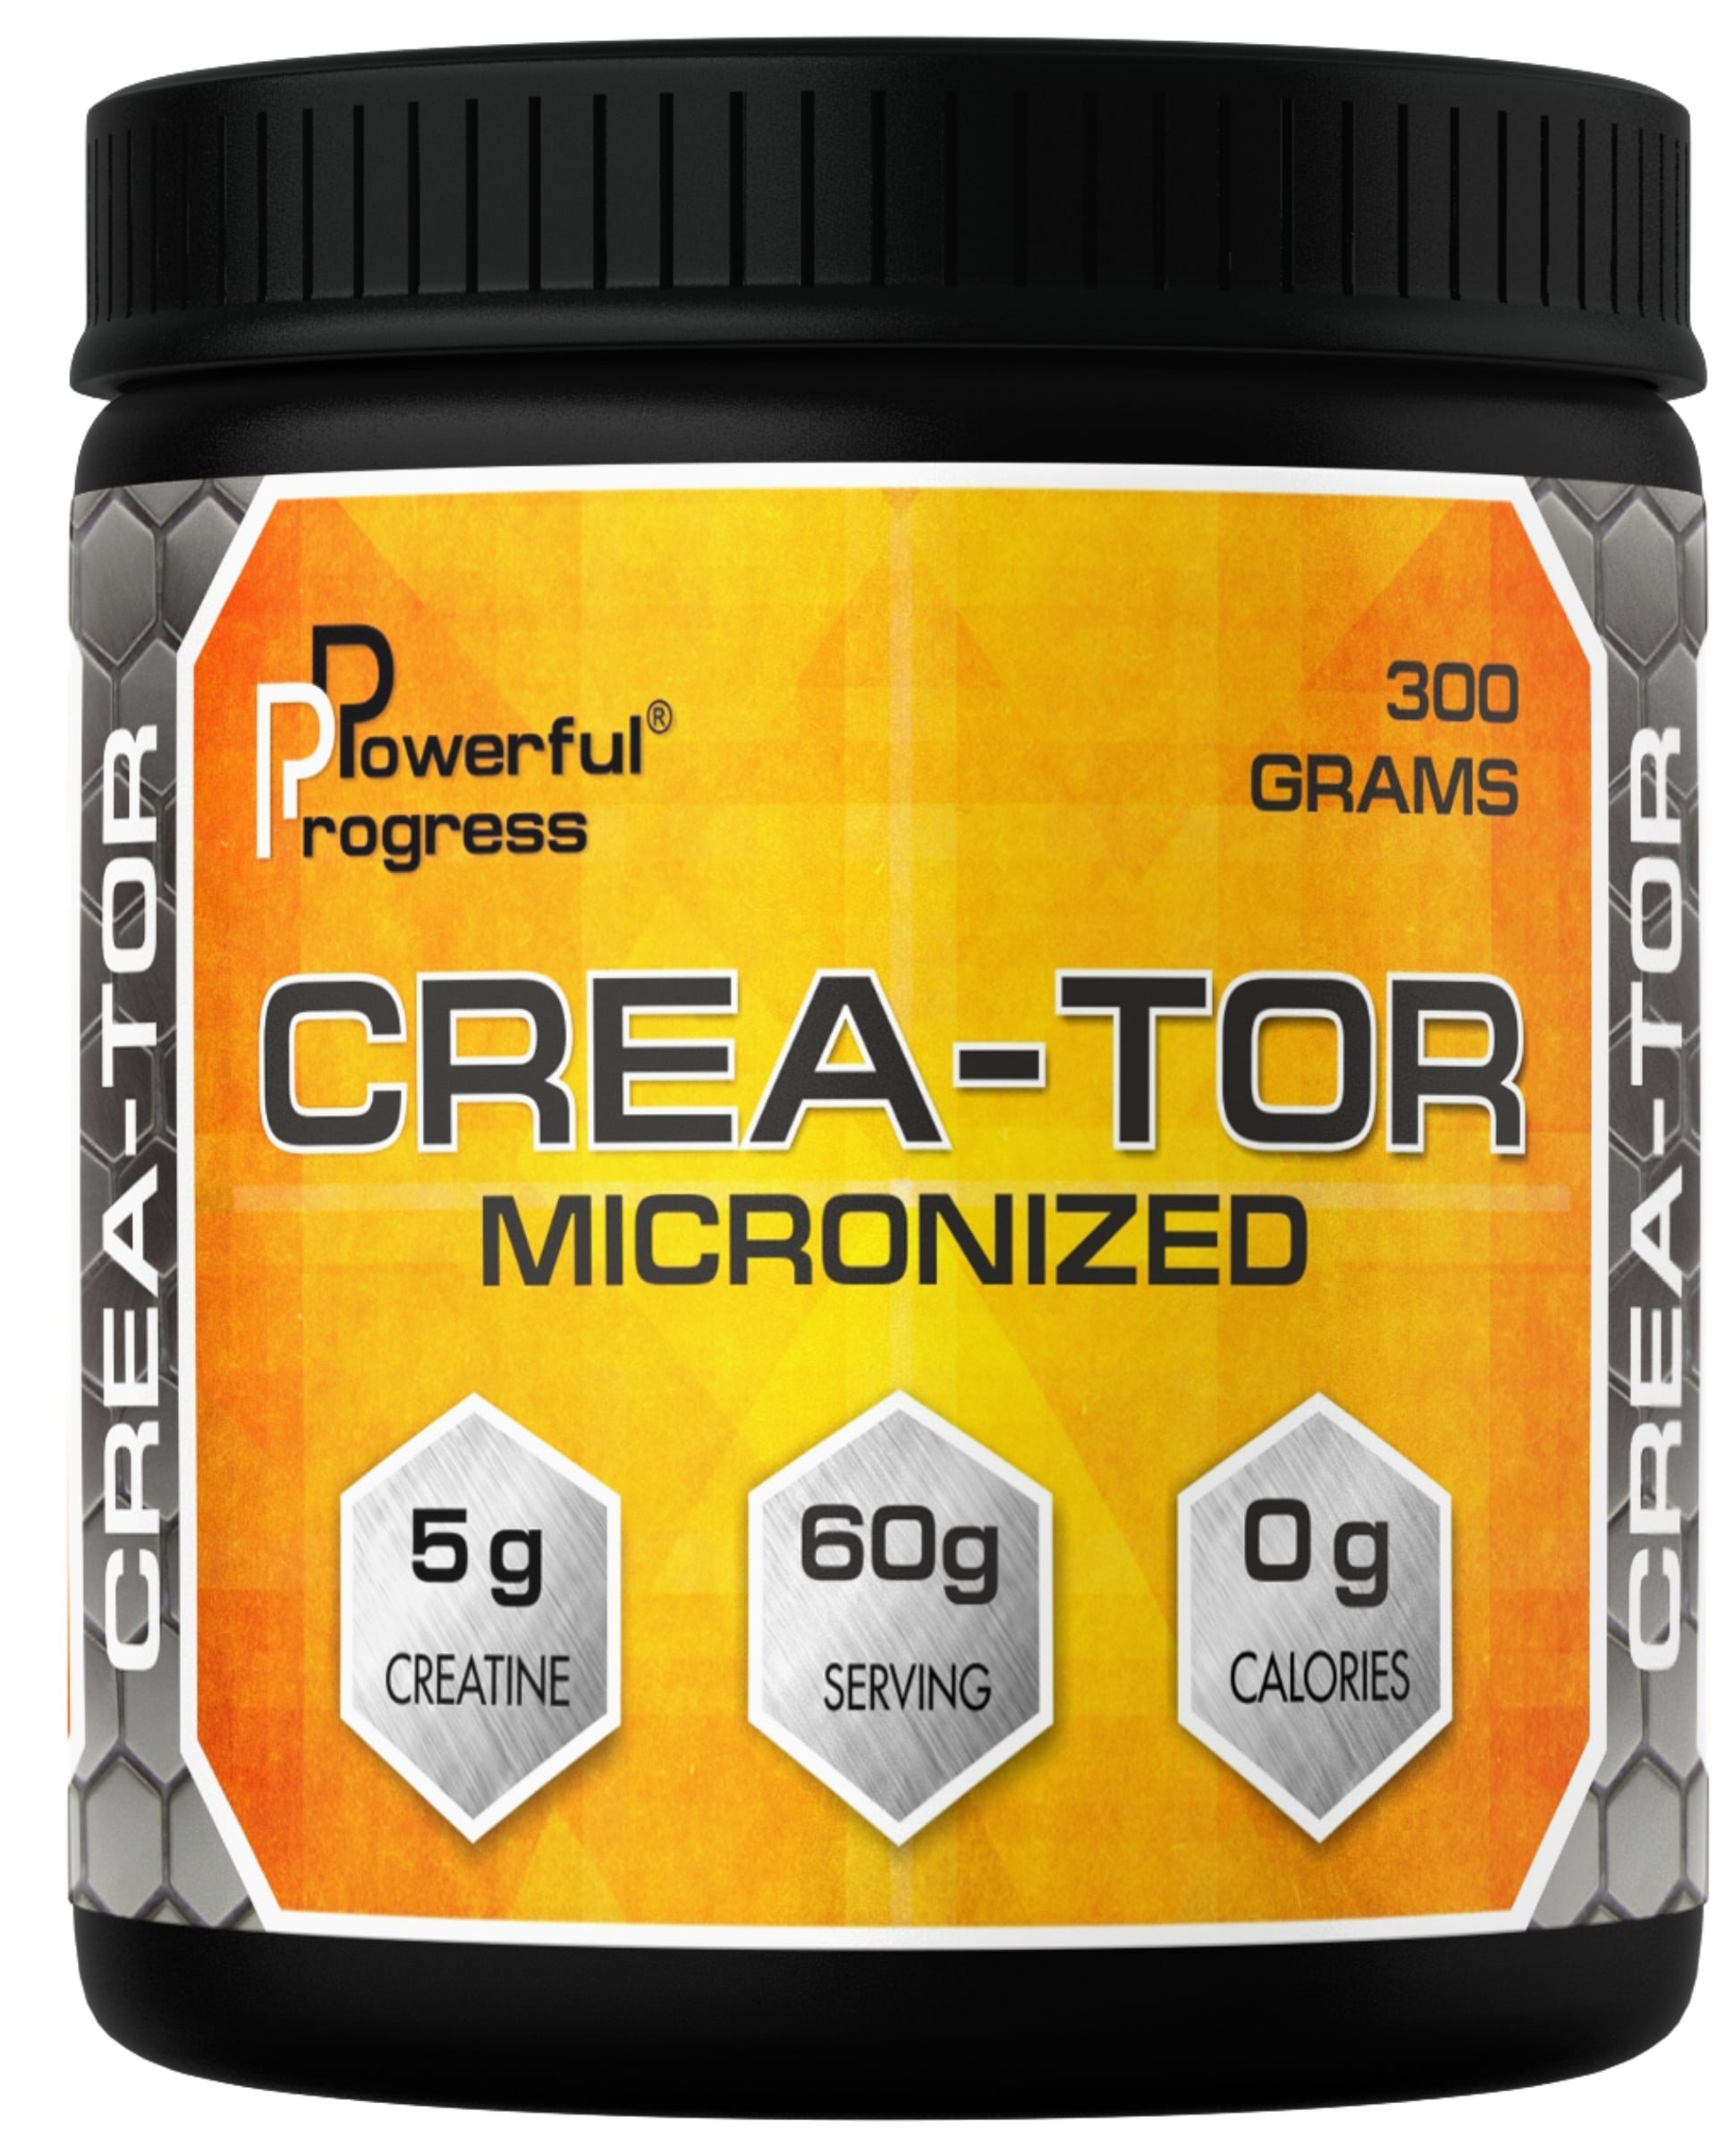 Crea-Tor Micronized, 300 g, Powerful Progress. Creatine monohydrate. Mass Gain Energy & Endurance Strength enhancement 